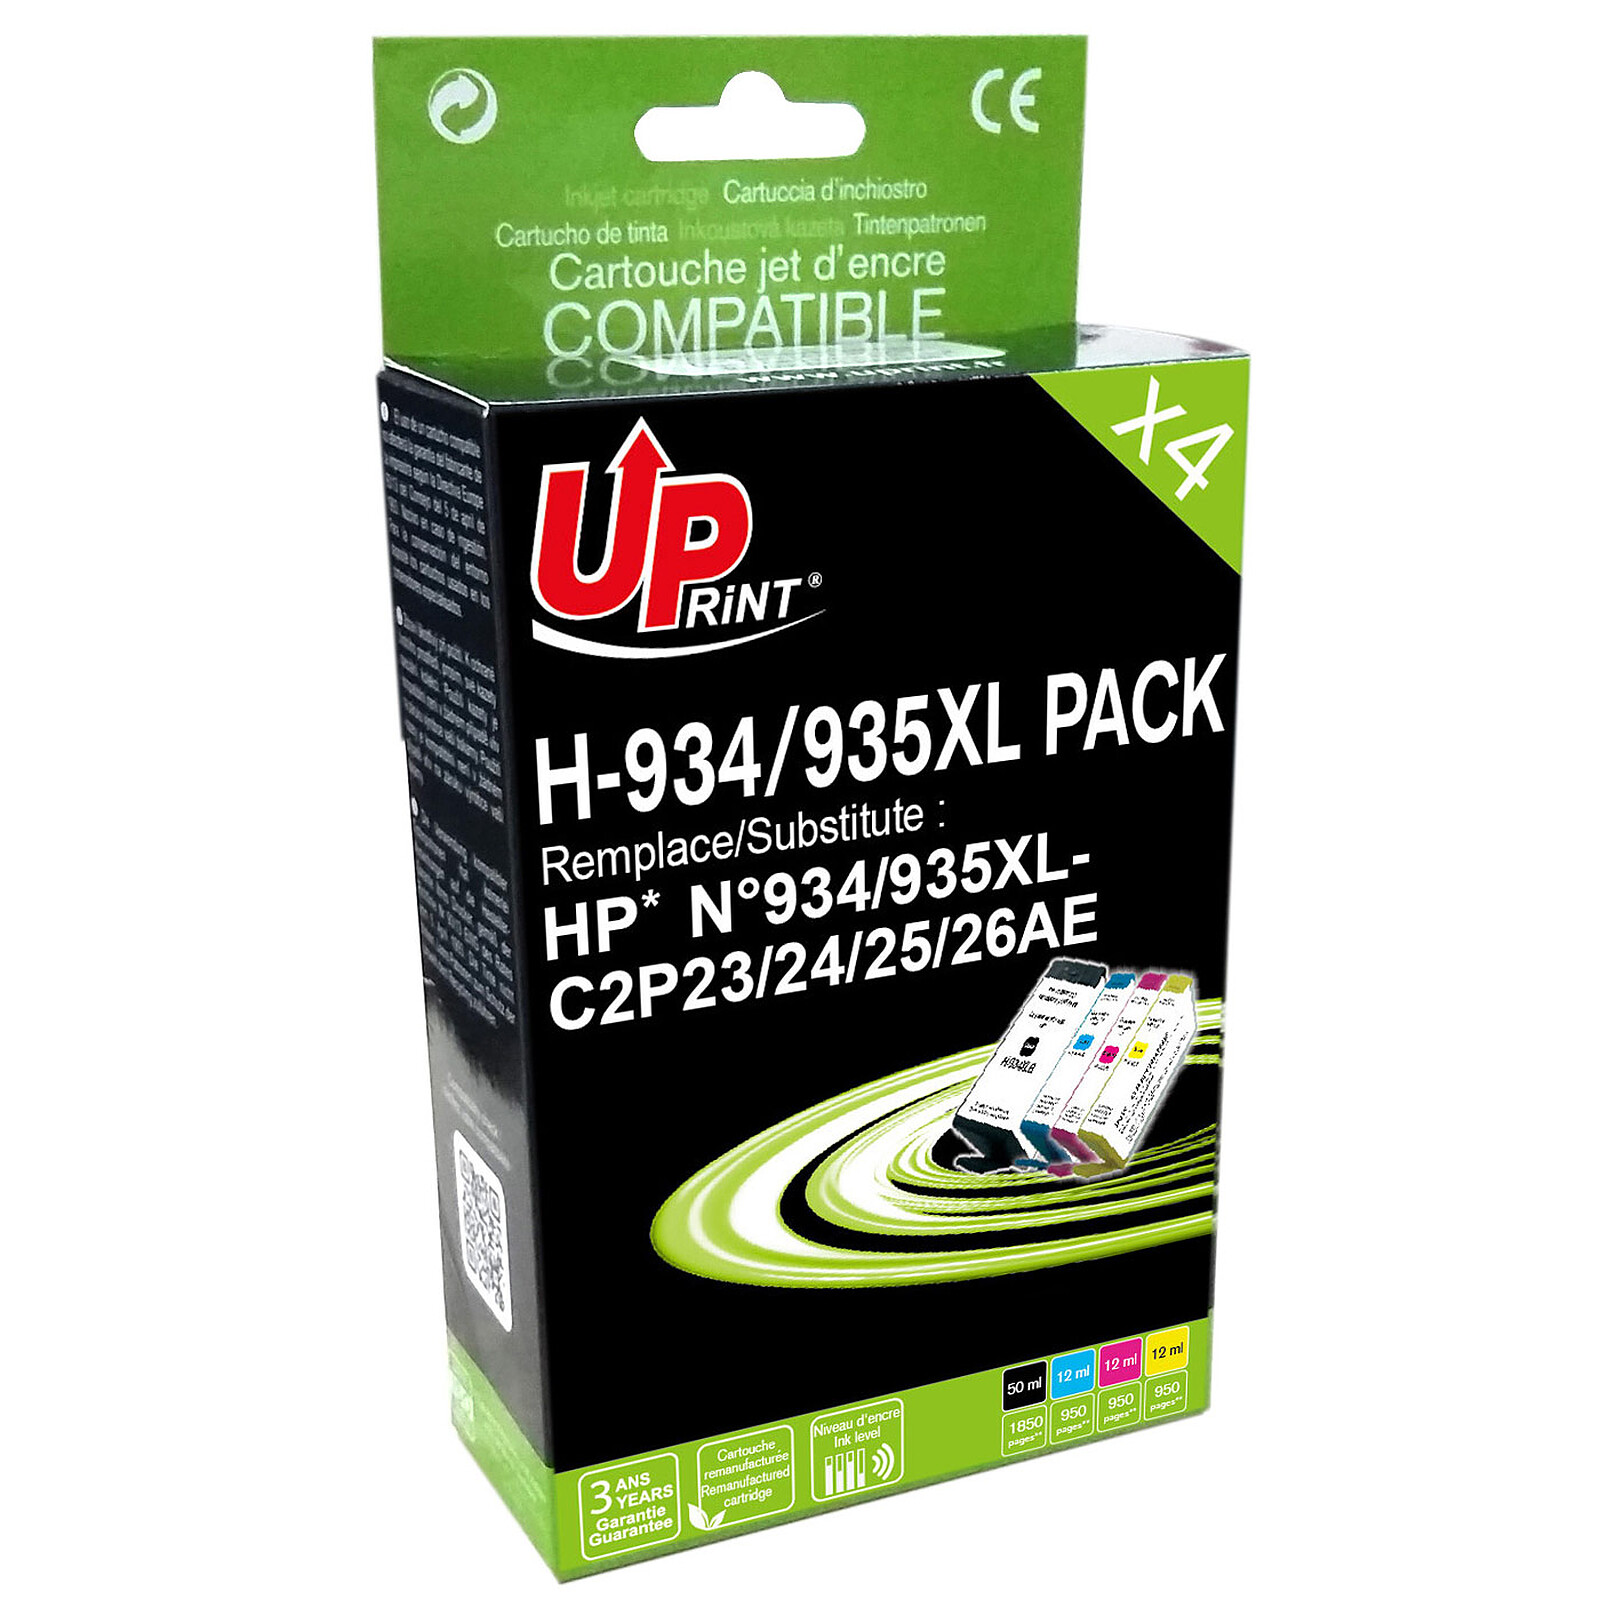 Cartouche compatible HP 912XL - noir - Uprint